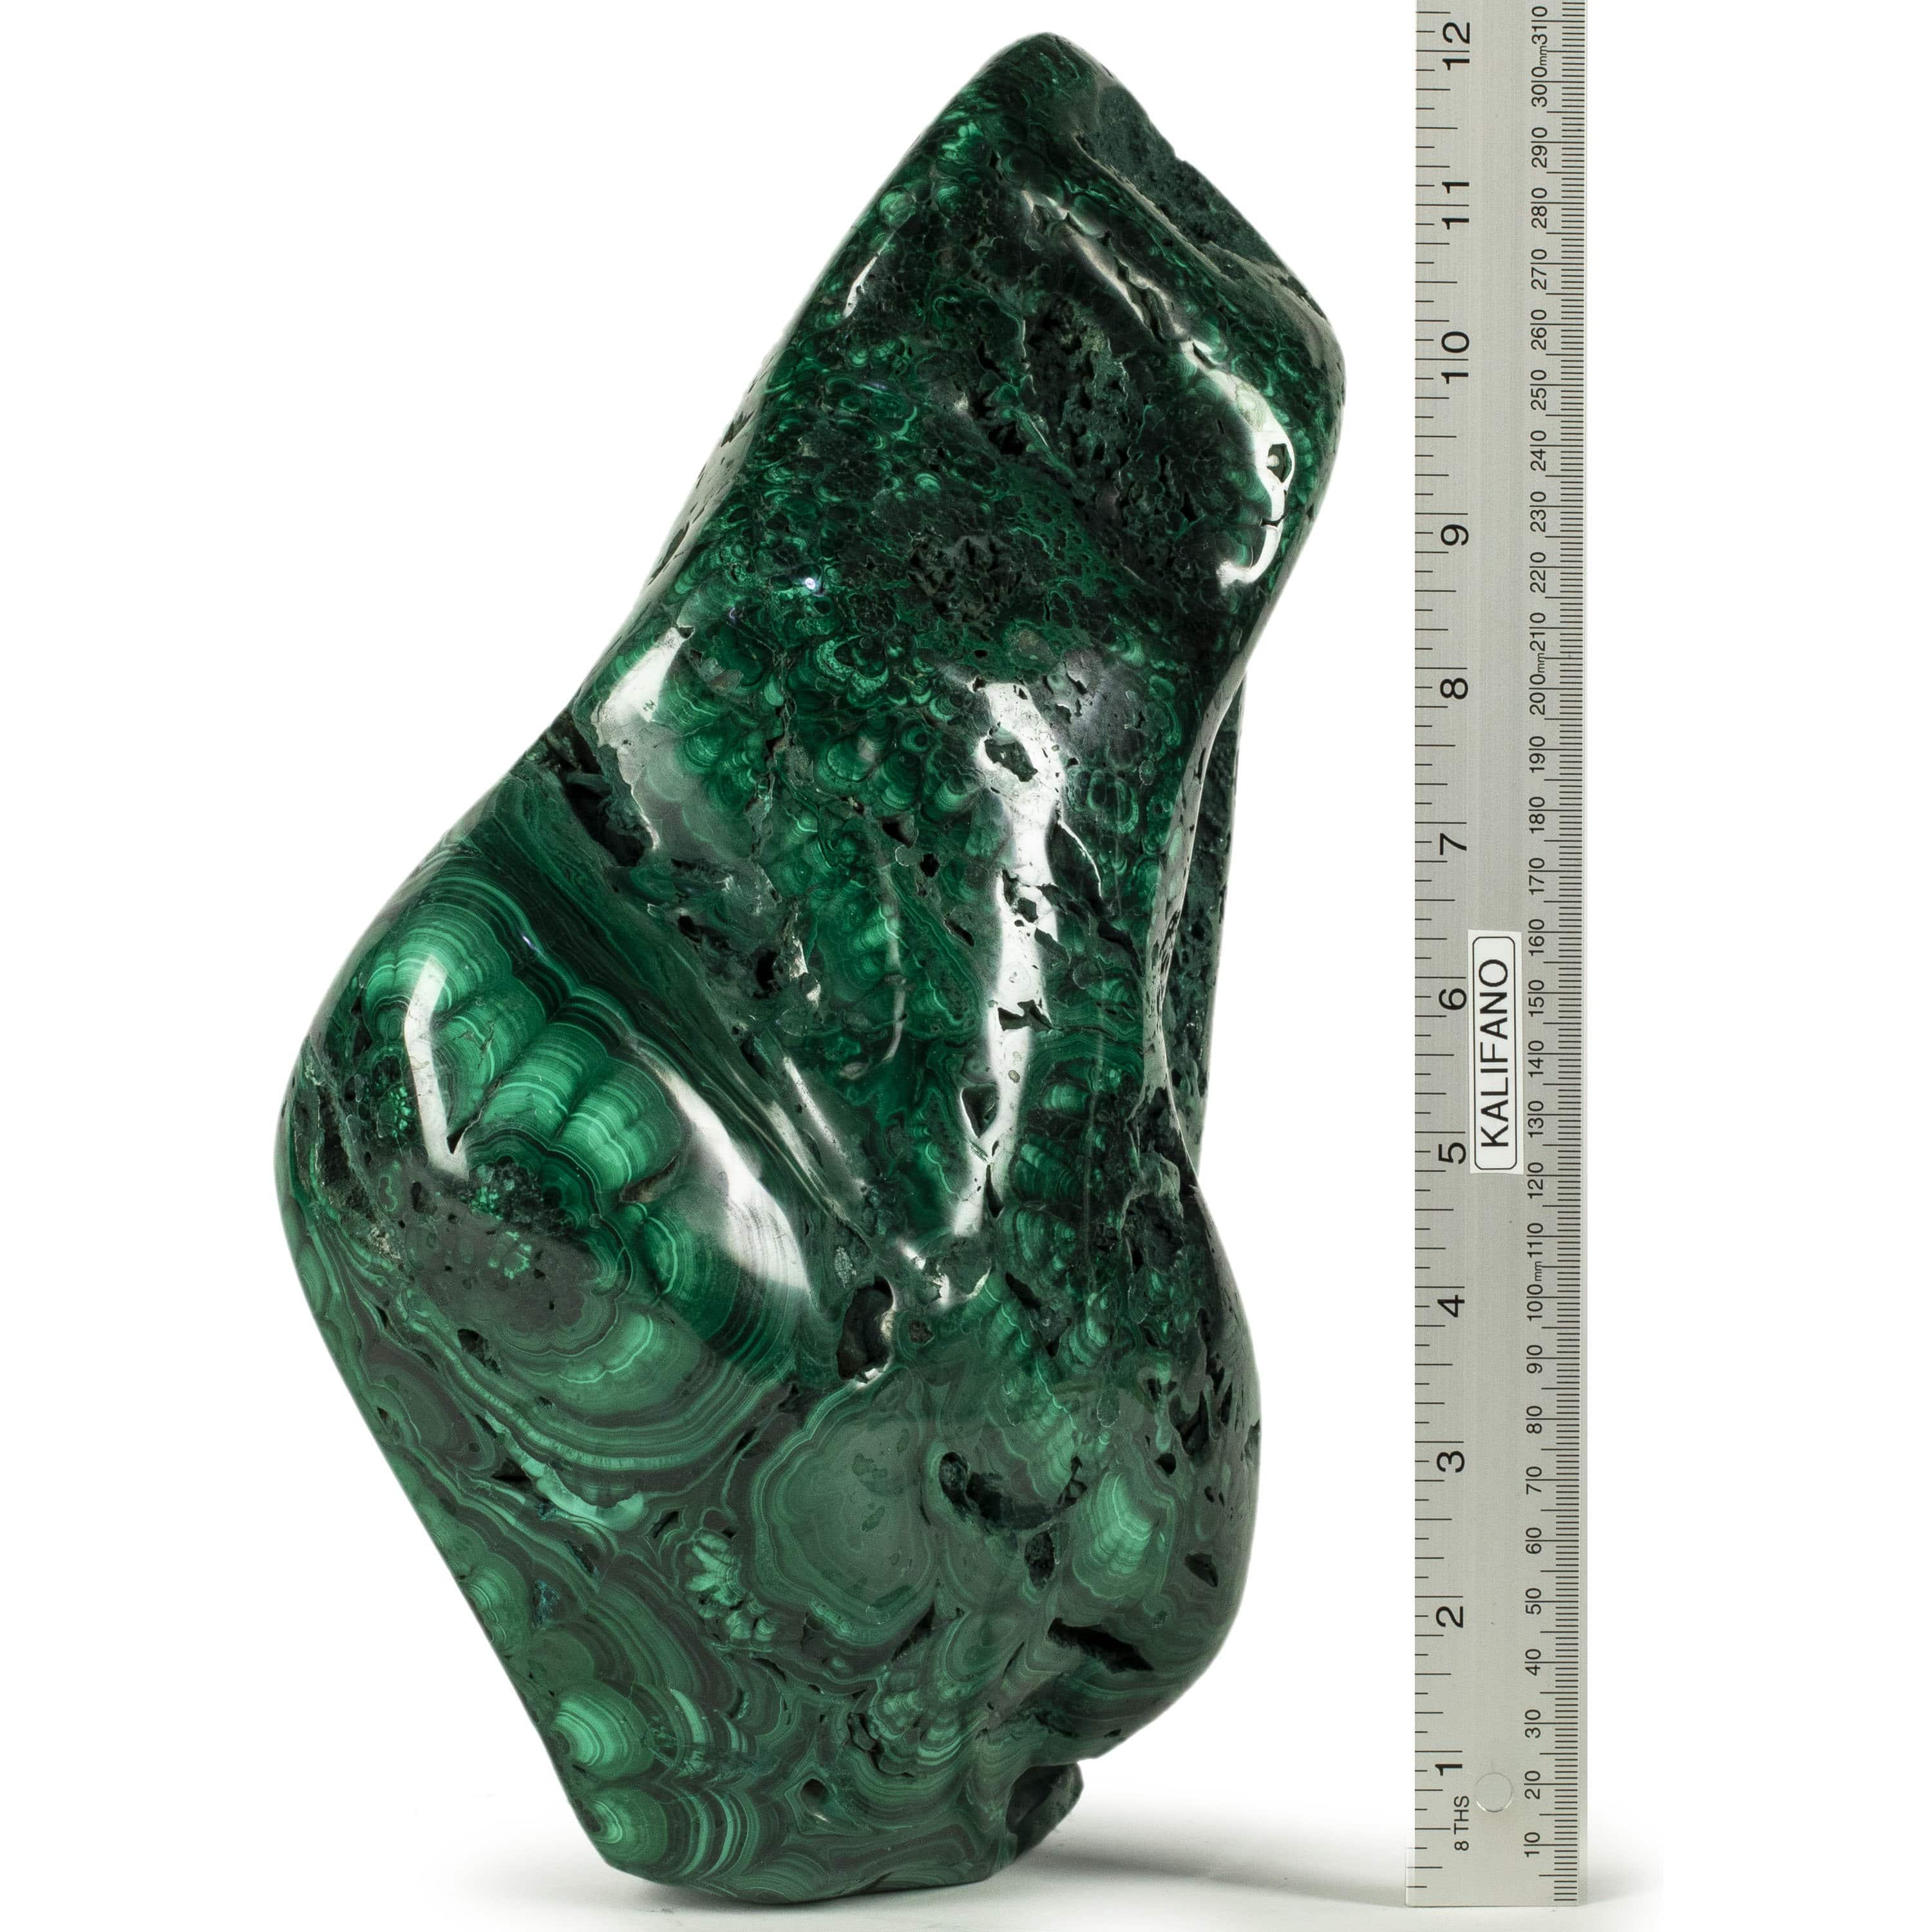 Kalifano Malachite Rare Natural Green Malachite Polished Freeform Specimen from Congo - 21.7 kg / 47.7 lbs MA13600.001